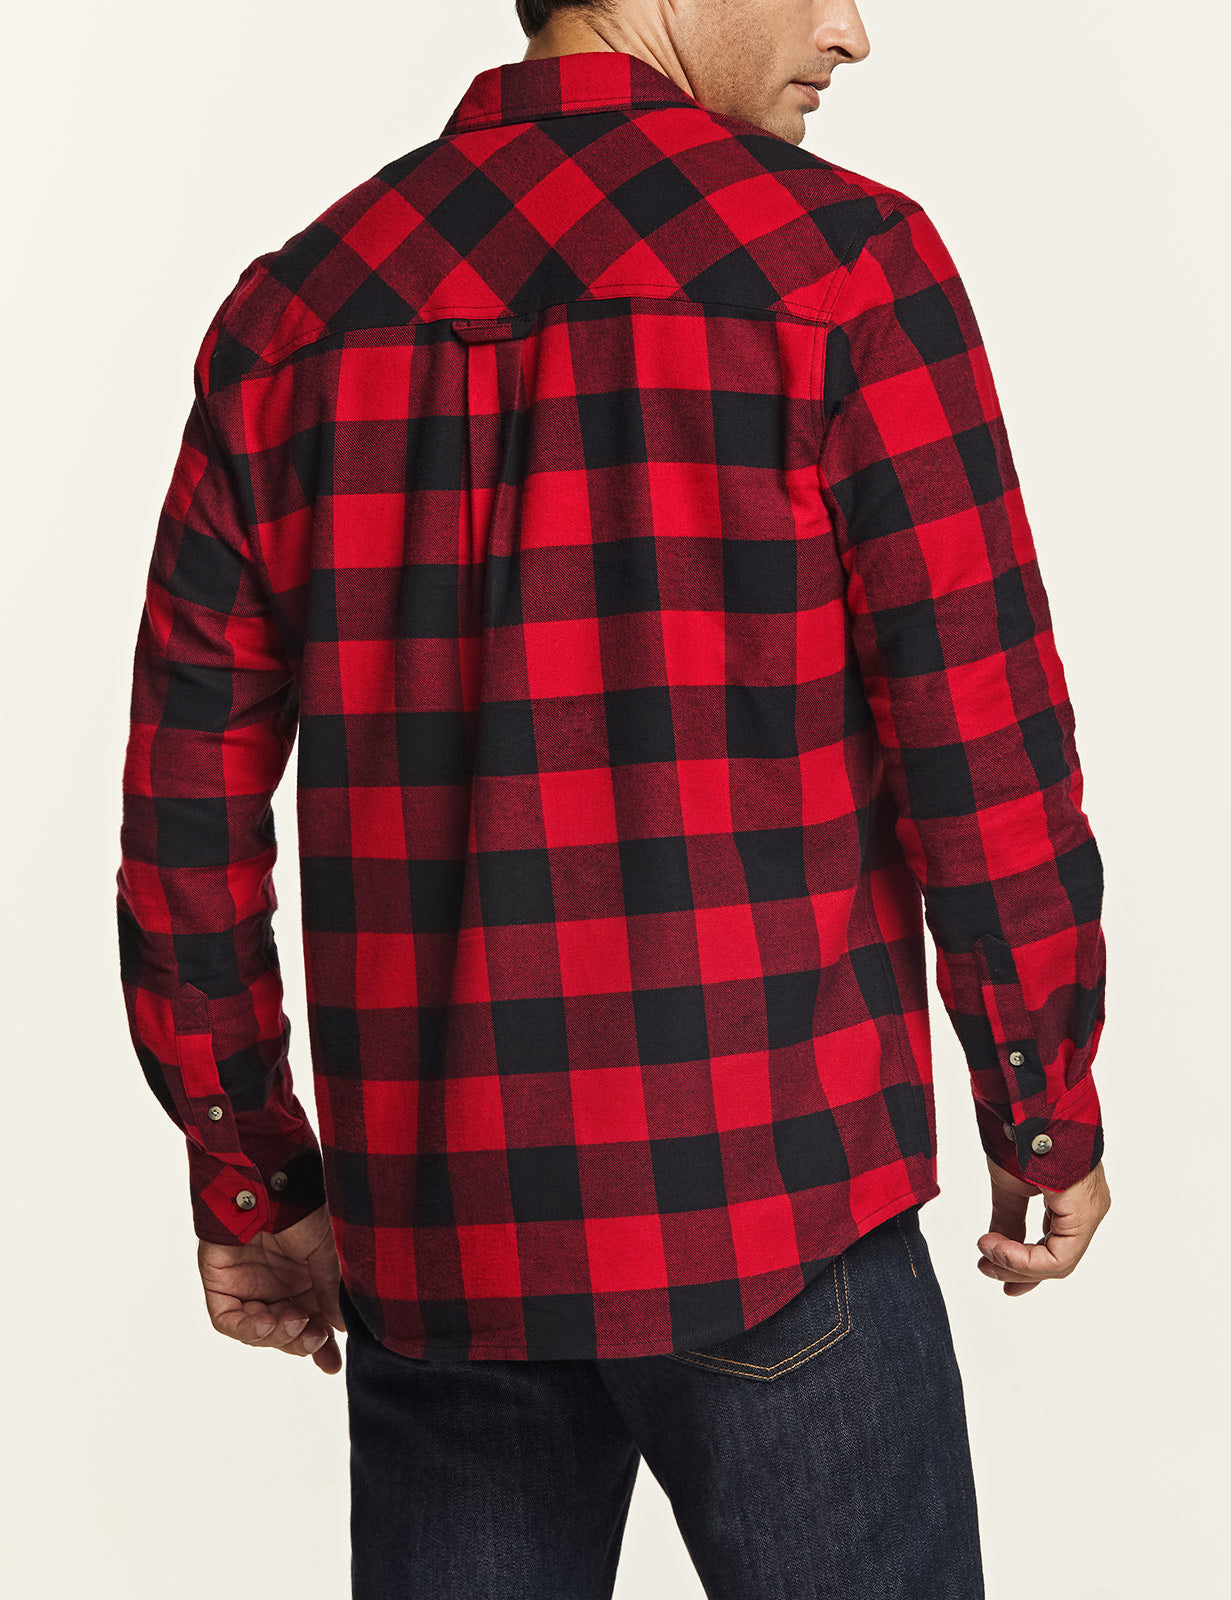 – CQR-Tactical [HOF110] Plaid Shirt Flannel Gear